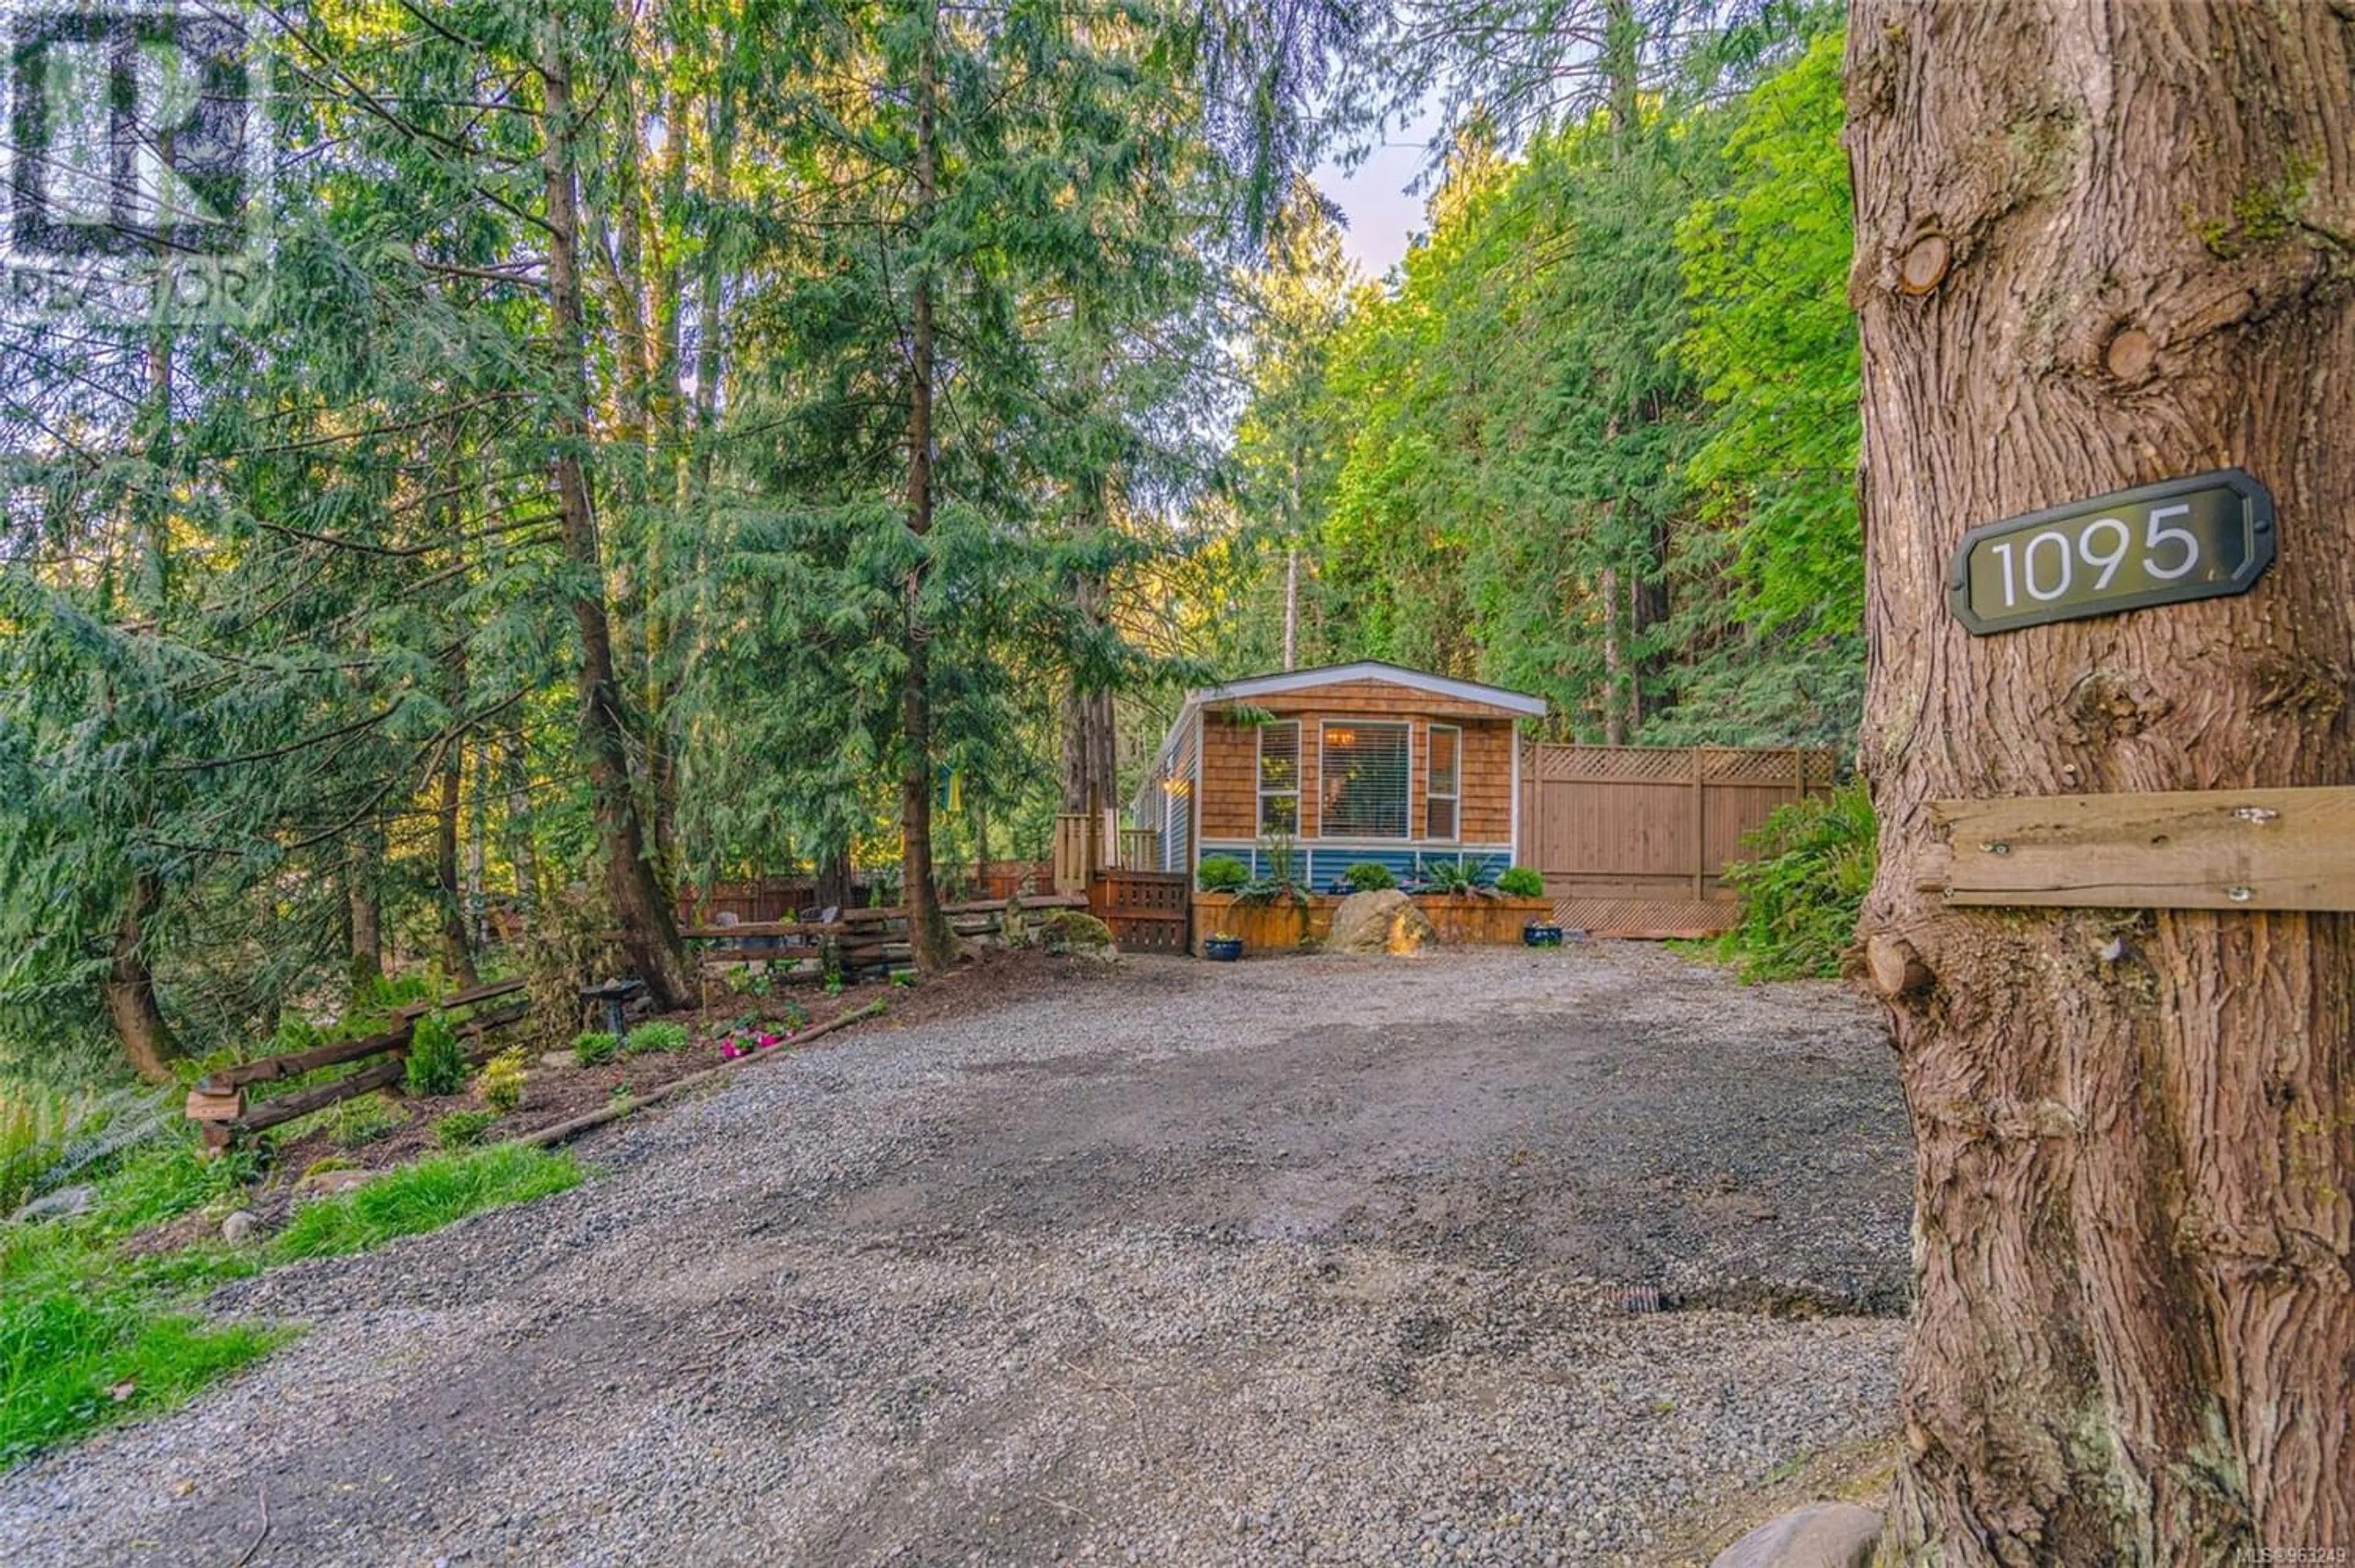 Cottage for 1095 Bertha Ave, Gabriola Island British Columbia V0R1X3